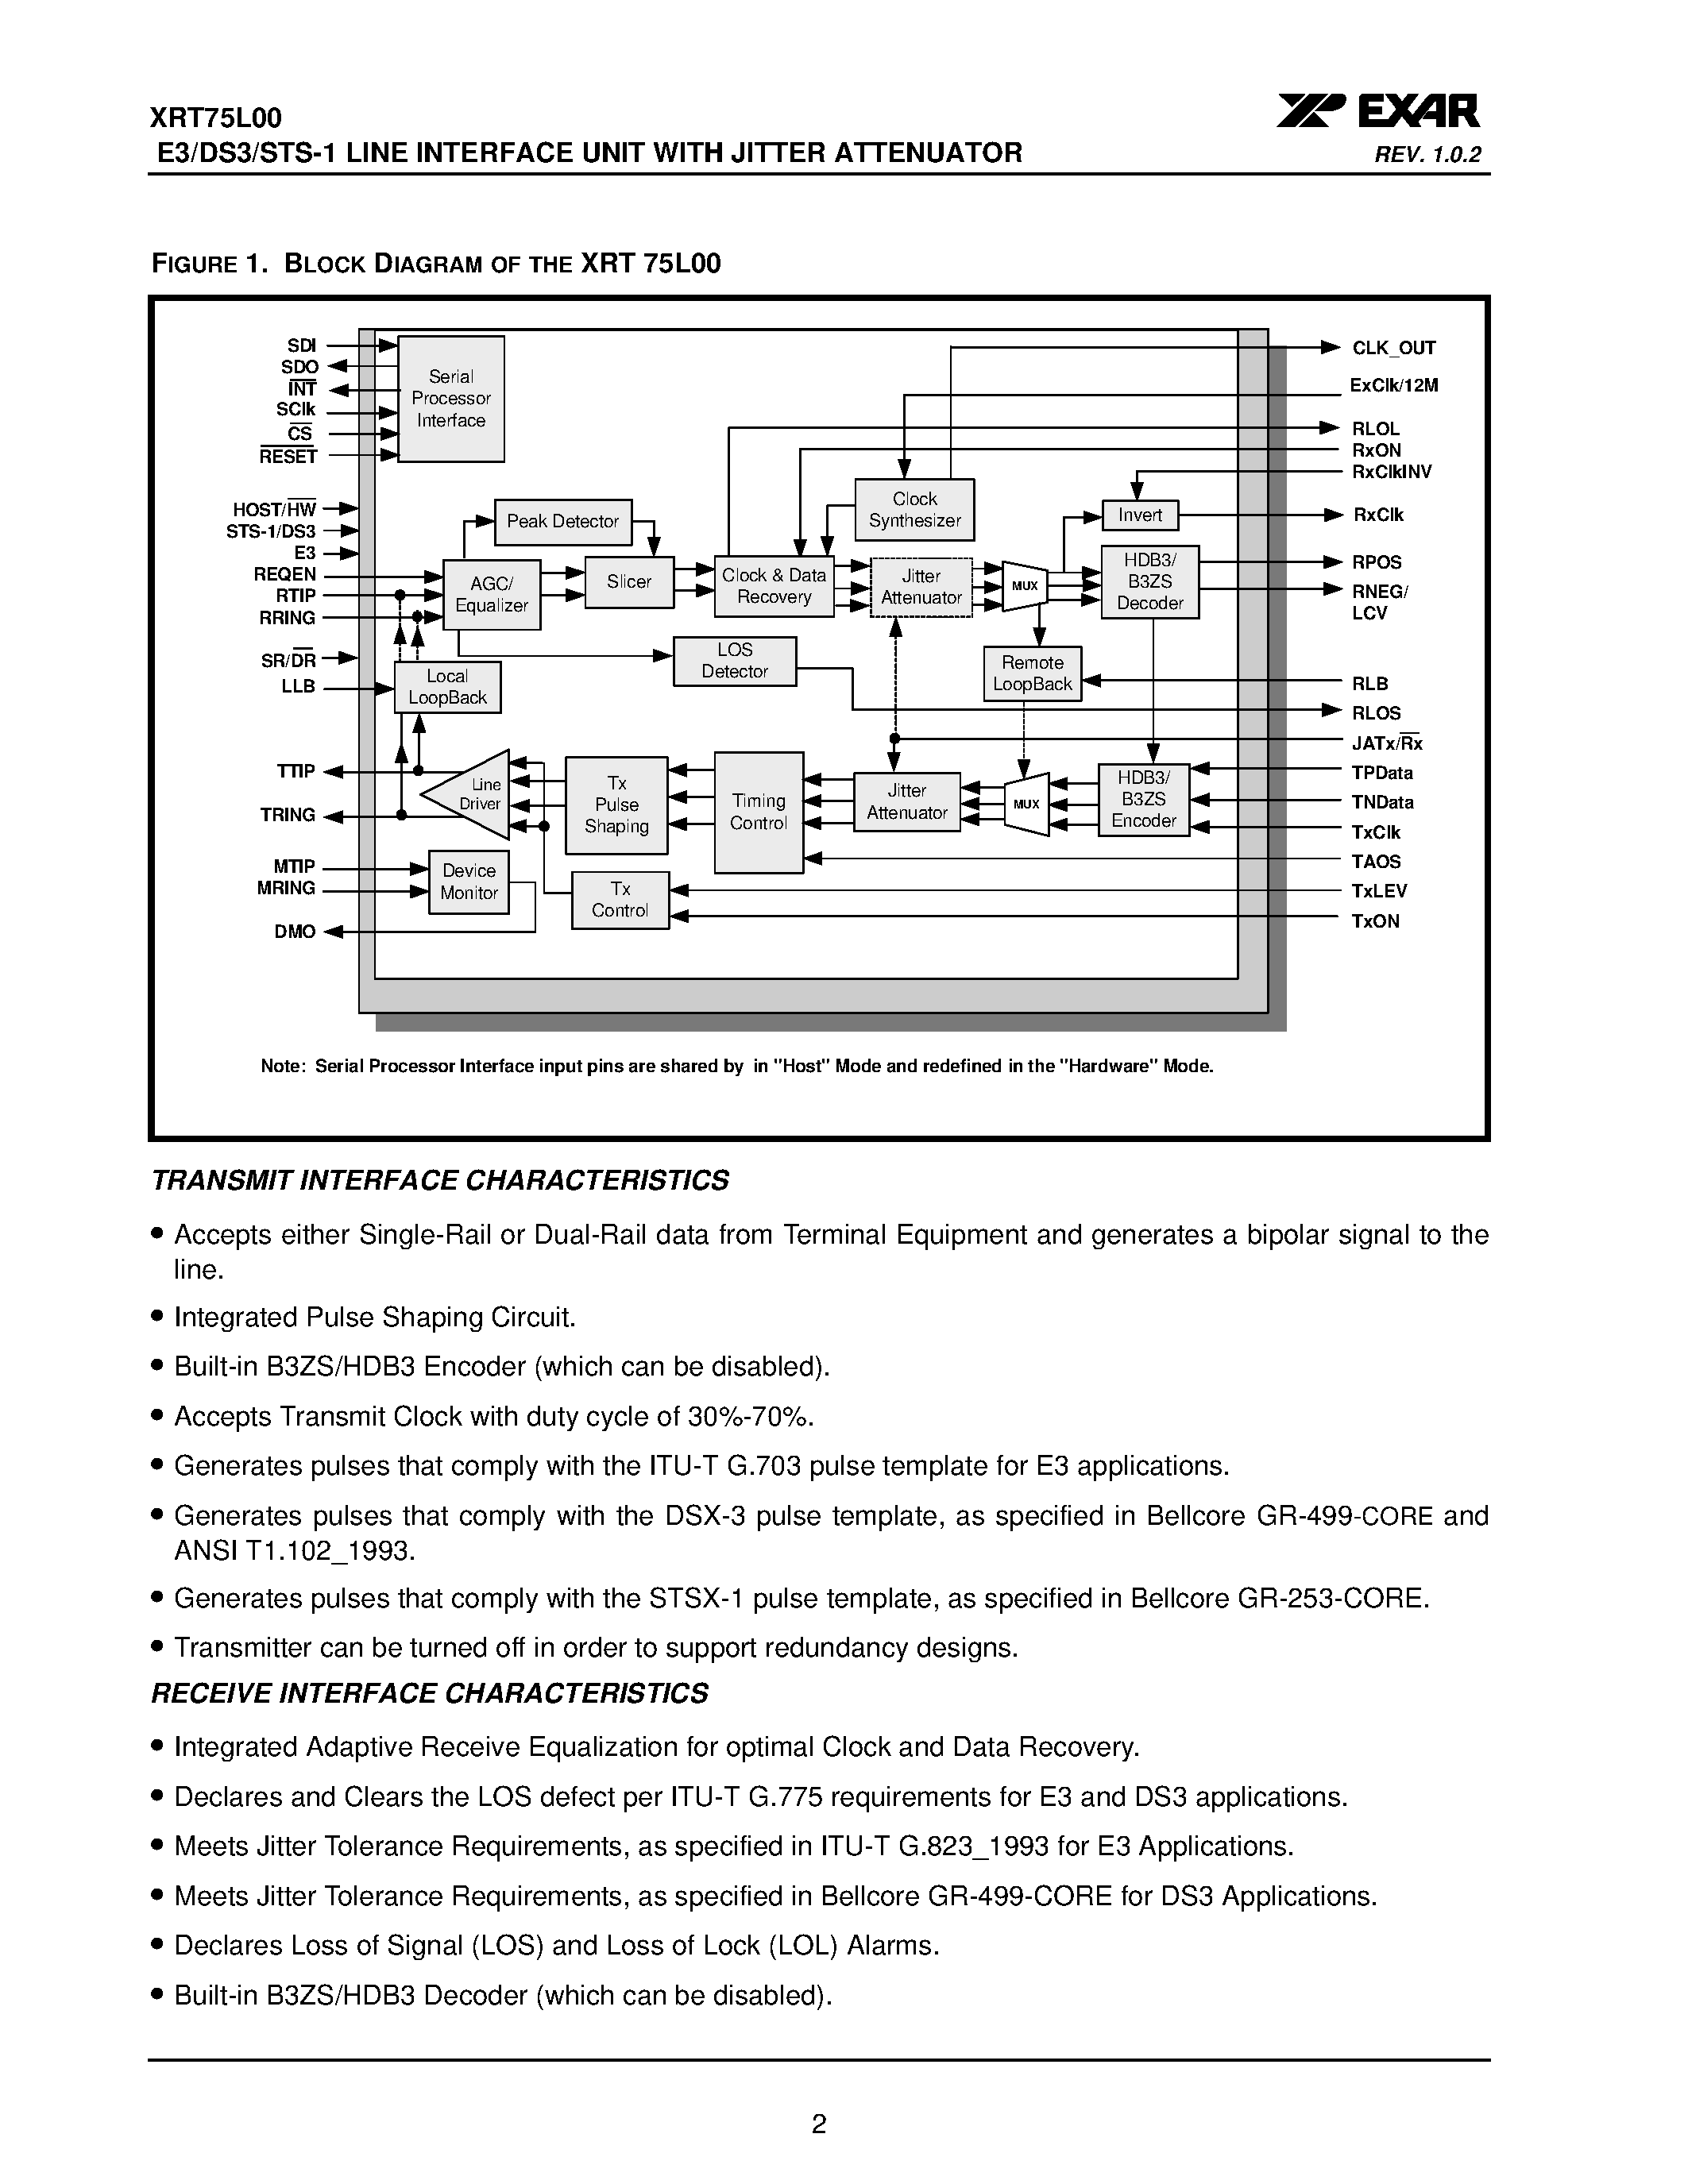 Datasheet XRT75L00 - E3/DS3/STS-1 LINE INTERFACE UNIT page 2